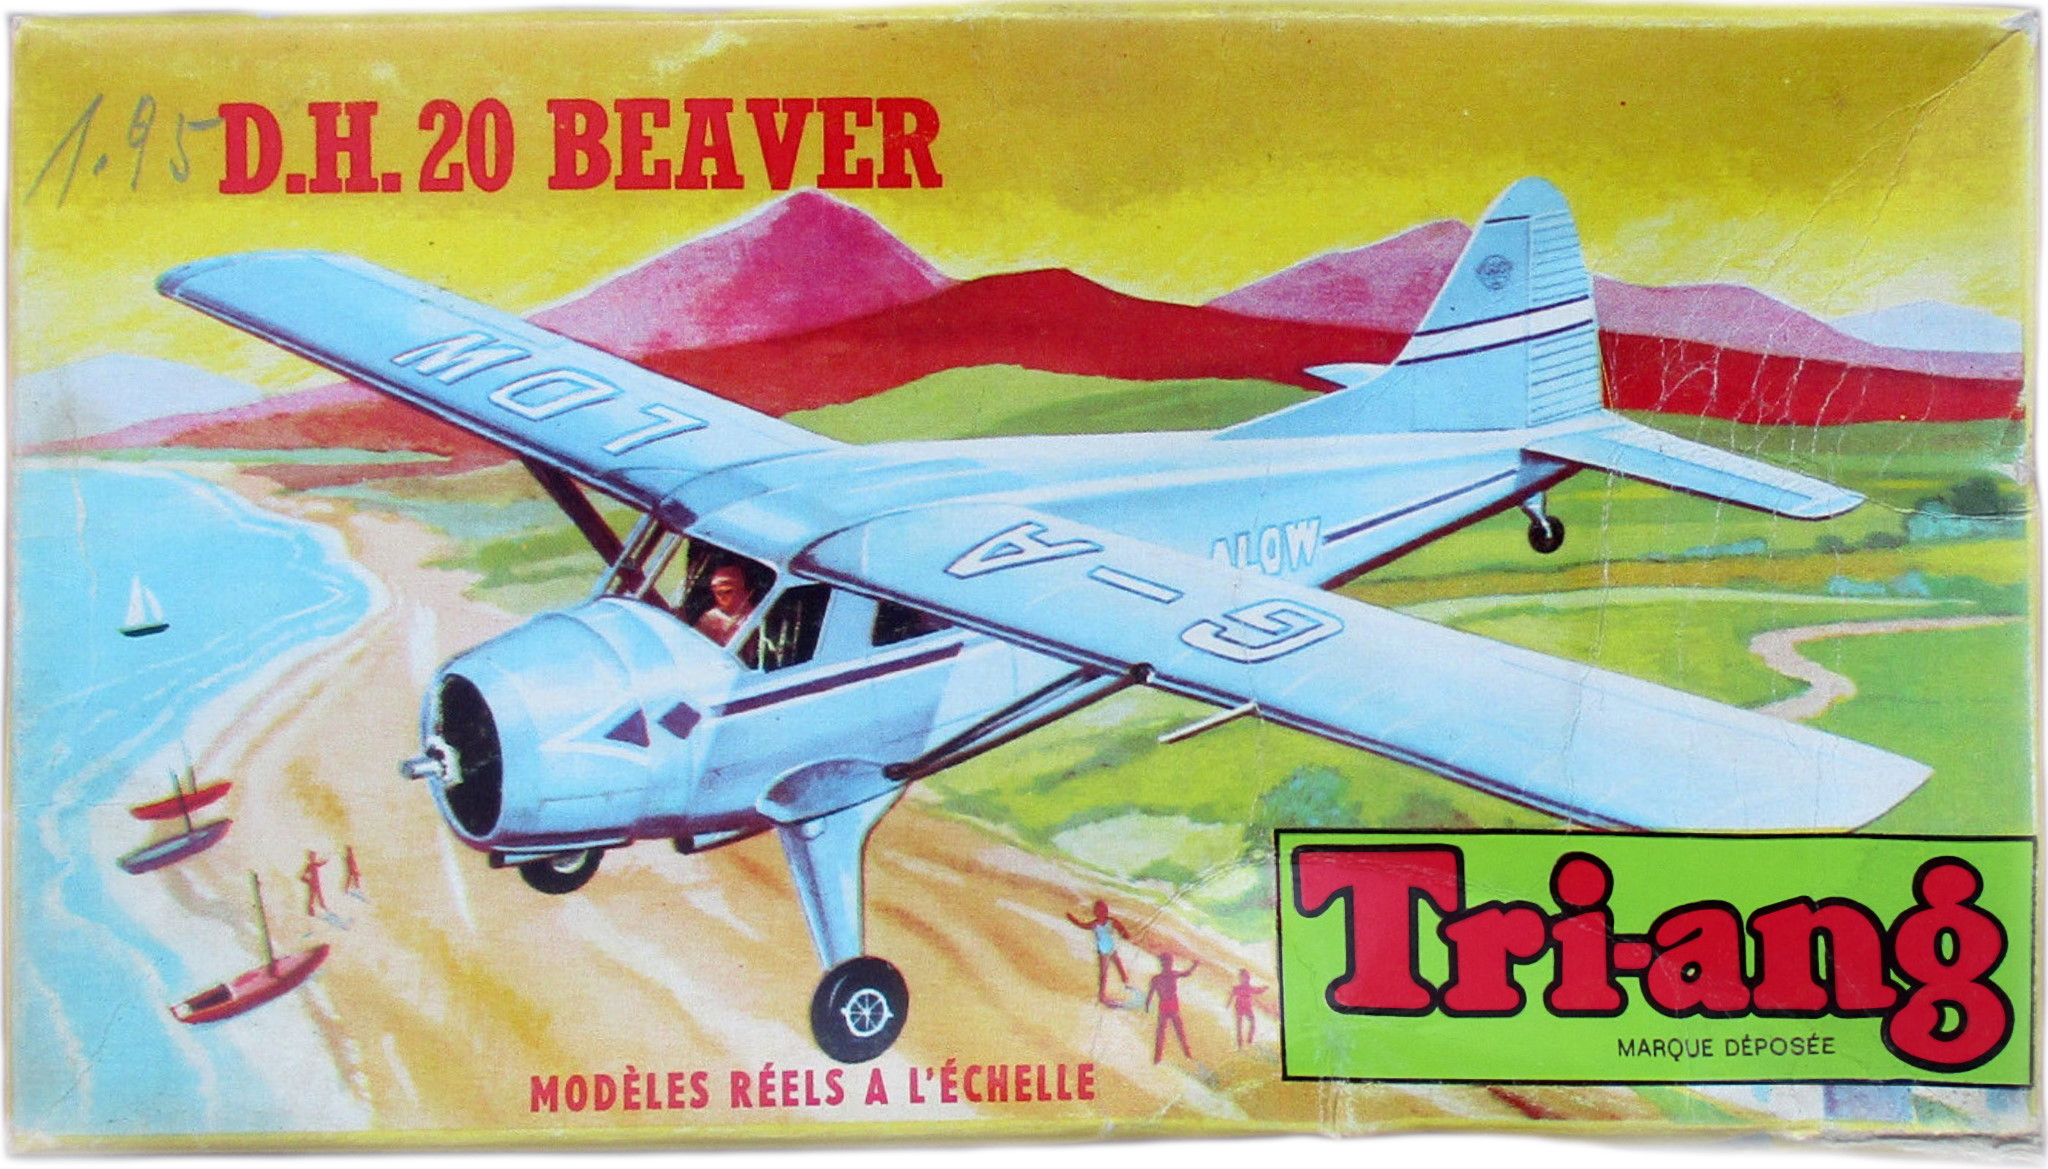 Tri-ang 384P D.H.20 Beaver, Lines Frères S.A. Calais, 1964 box